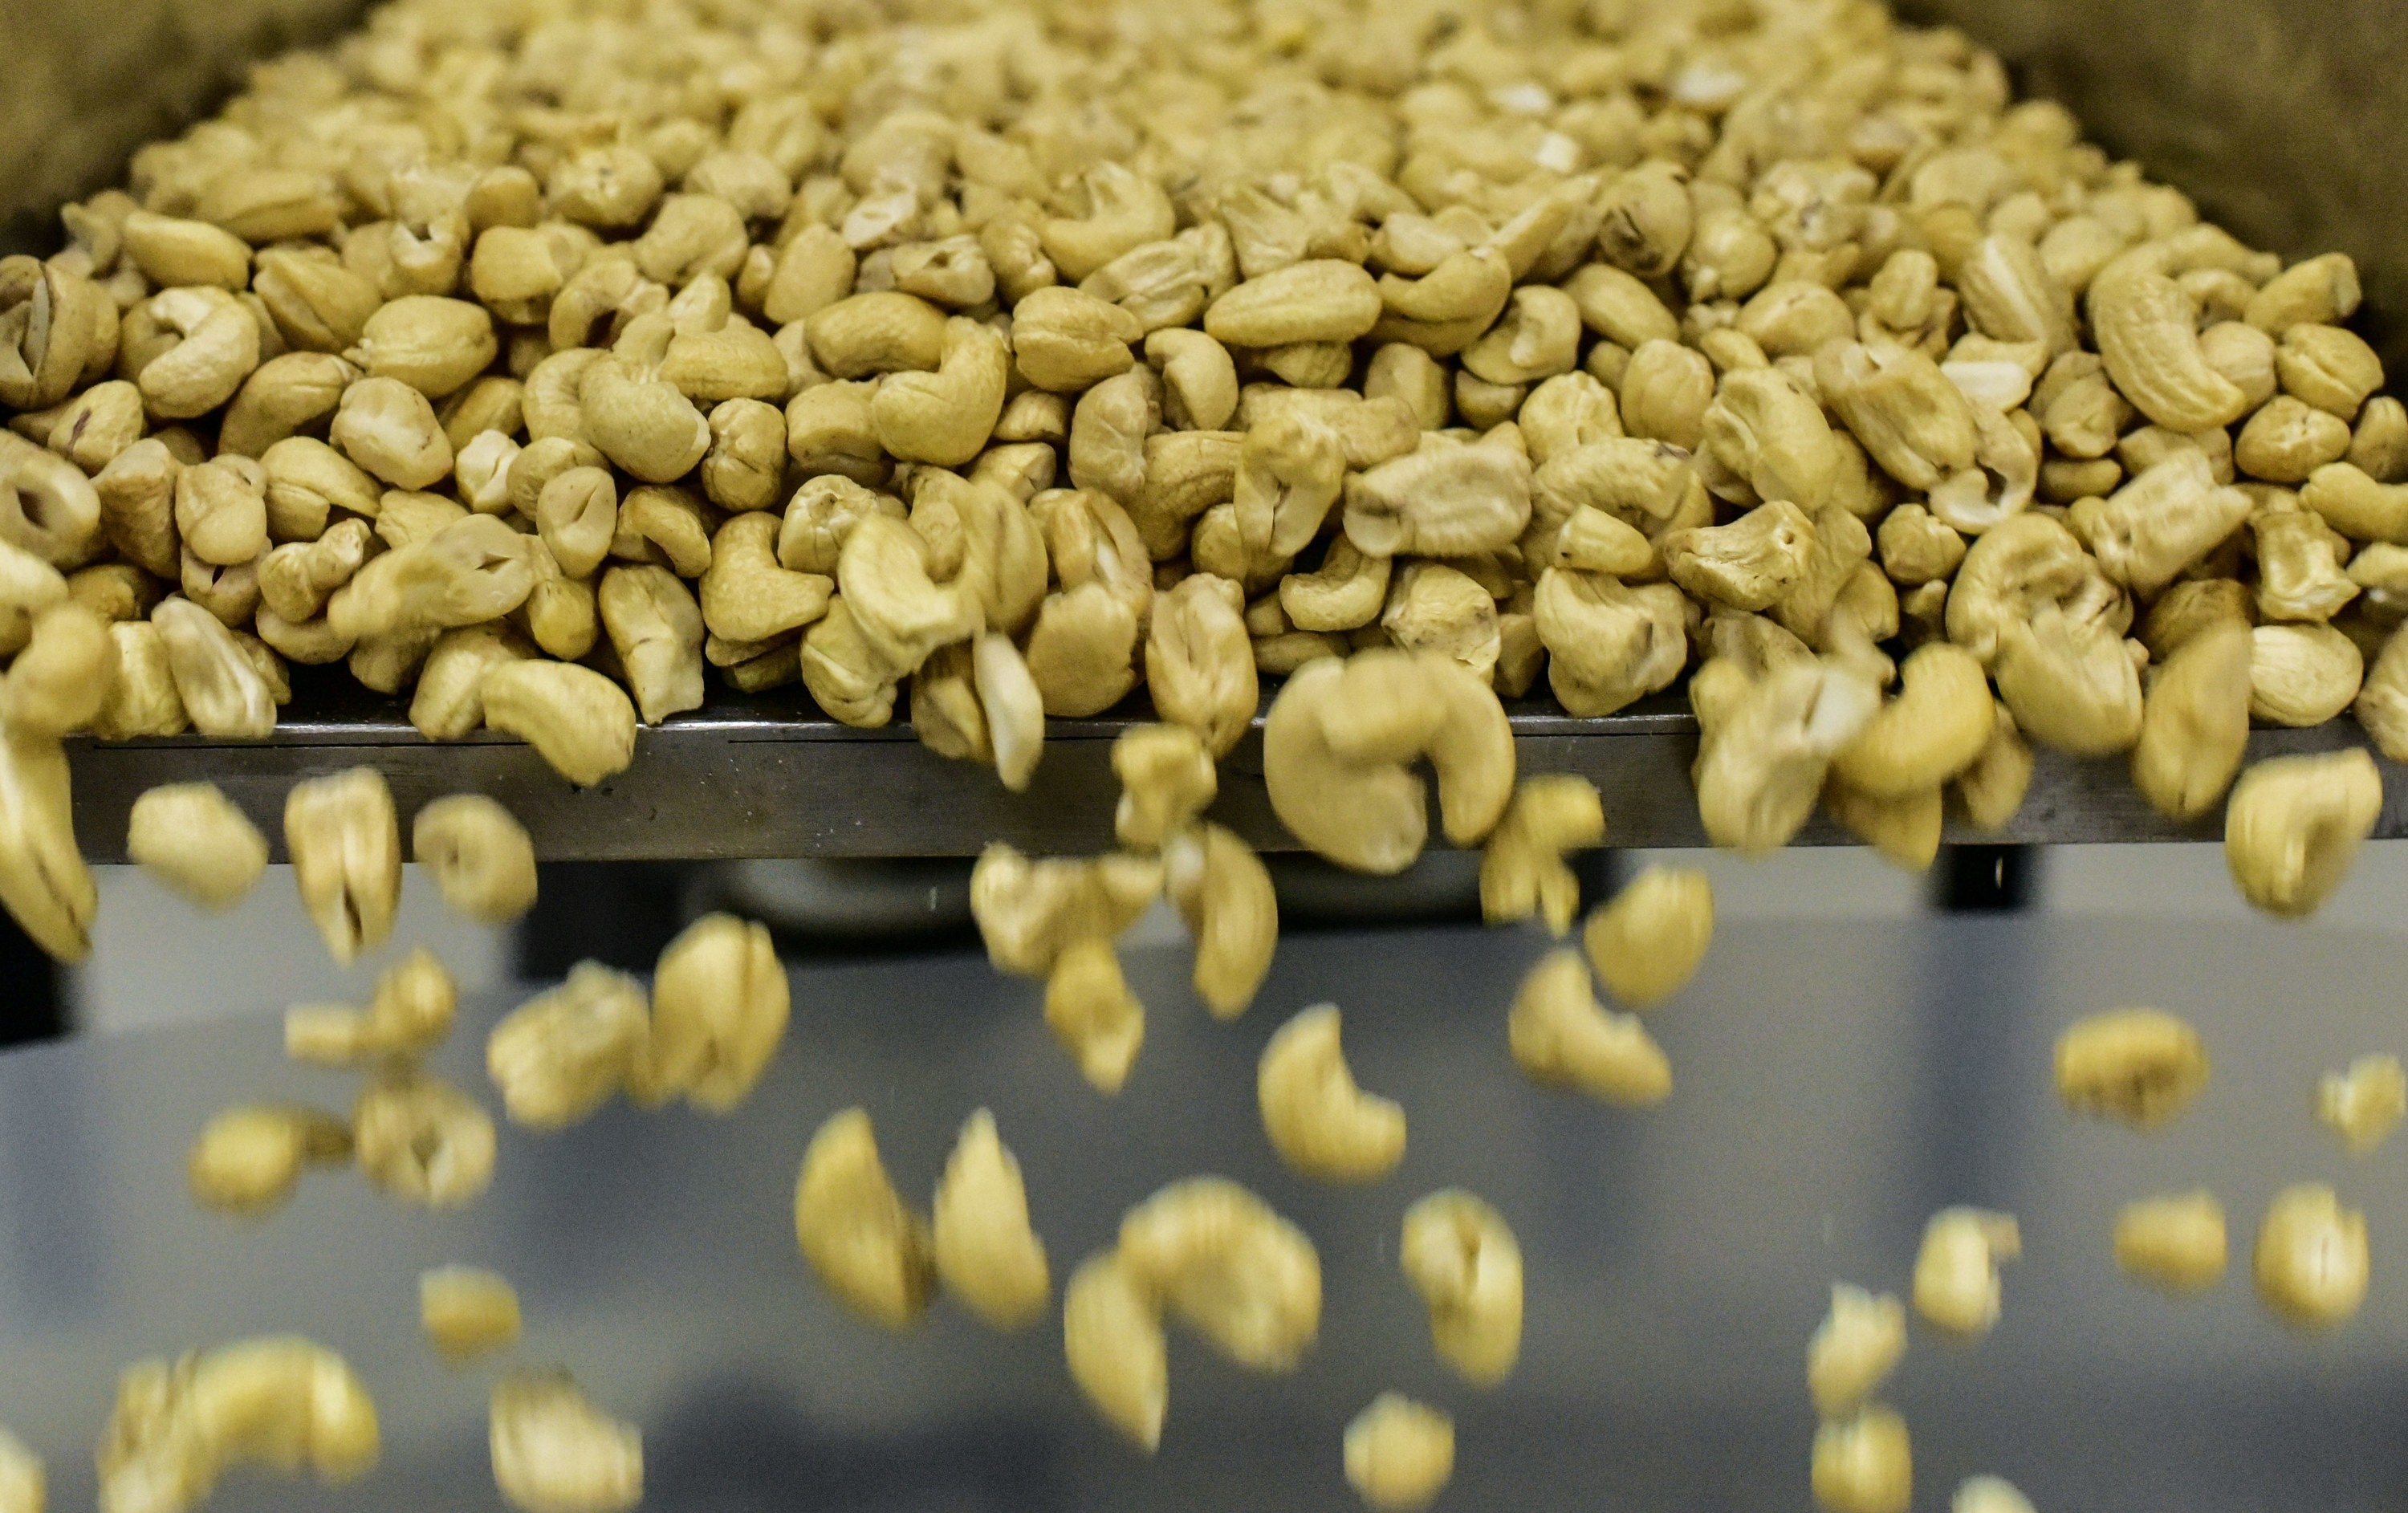 Unshelled cashews going down an assembly line